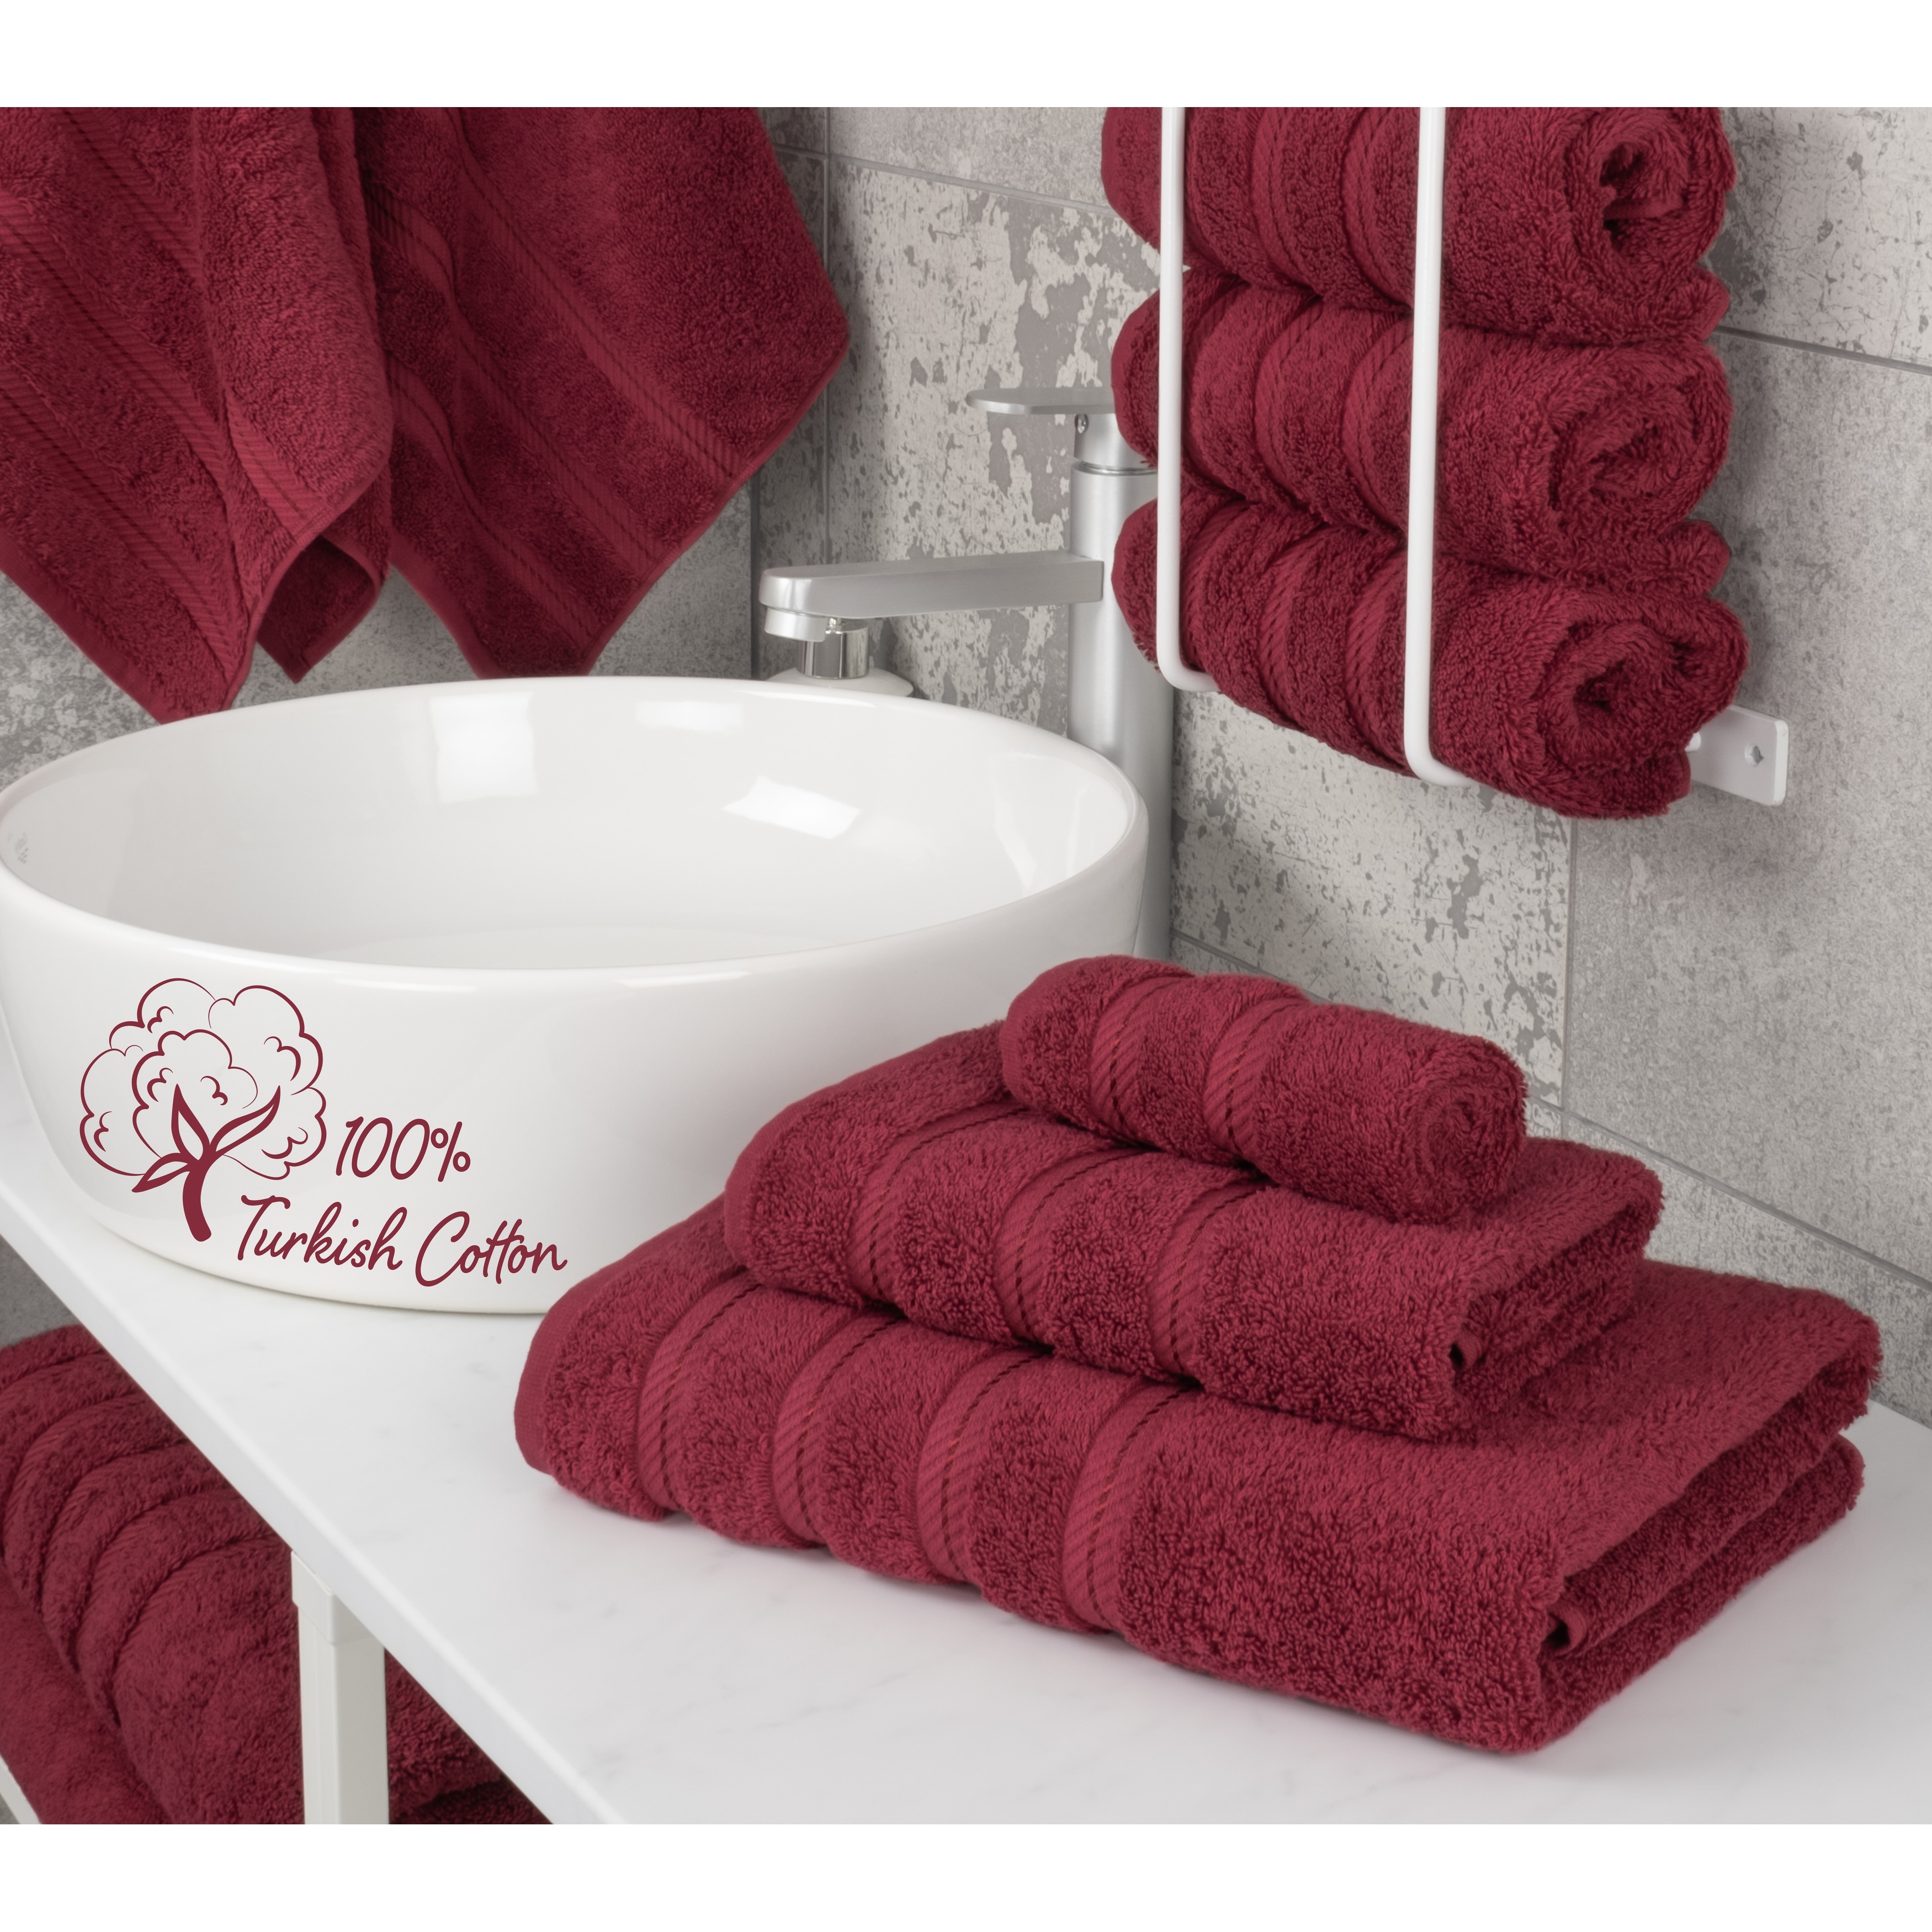 https://ak1.ostkcdn.com/images/products/is/images/direct/ed8779816f79bd936933655eed69fda0b8e0da74/American-Soft-Linen-3-Piece%2C-100%25-Genuine-Turkish-Cotton-Premium-%26-Luxury-Towels-Bathroom-Sets.jpg